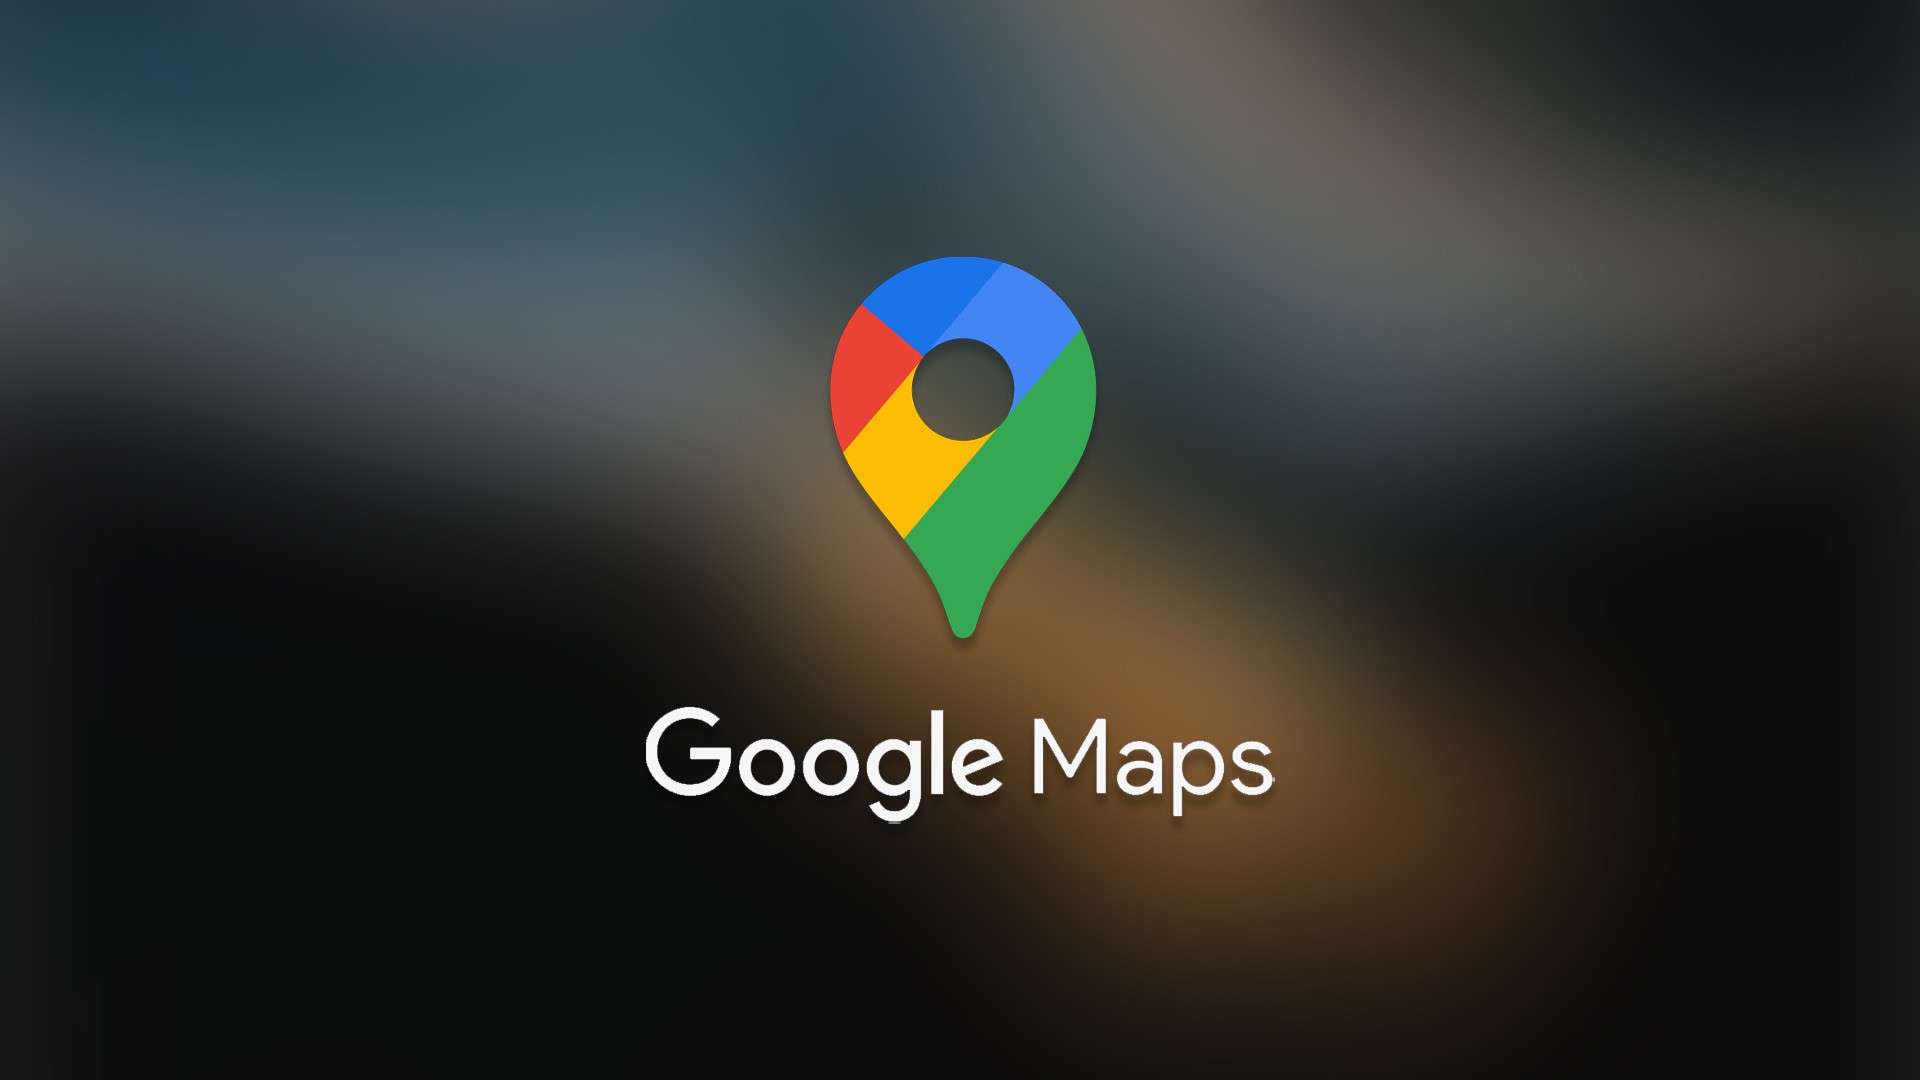 Google Maps se Actualiza con Nuevo Diseño